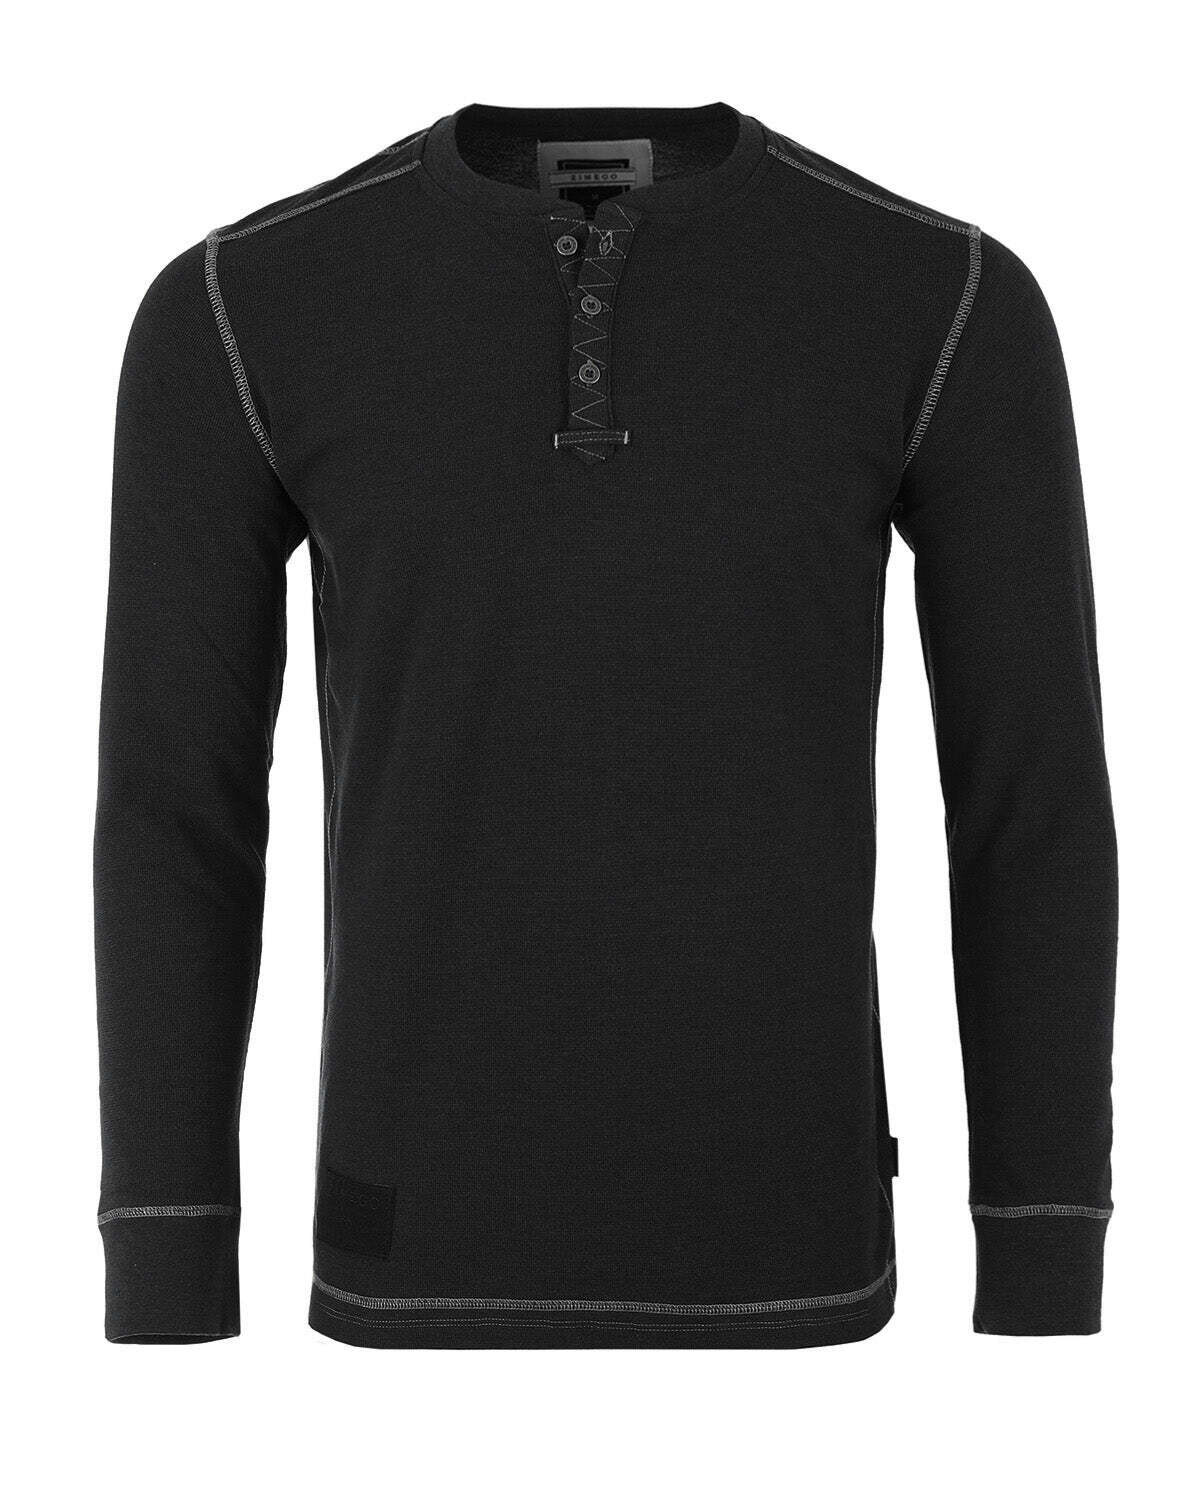 ZIMEGO Men's Casual Long Sleeve Lightweight Thermal Henley Essential Shirt